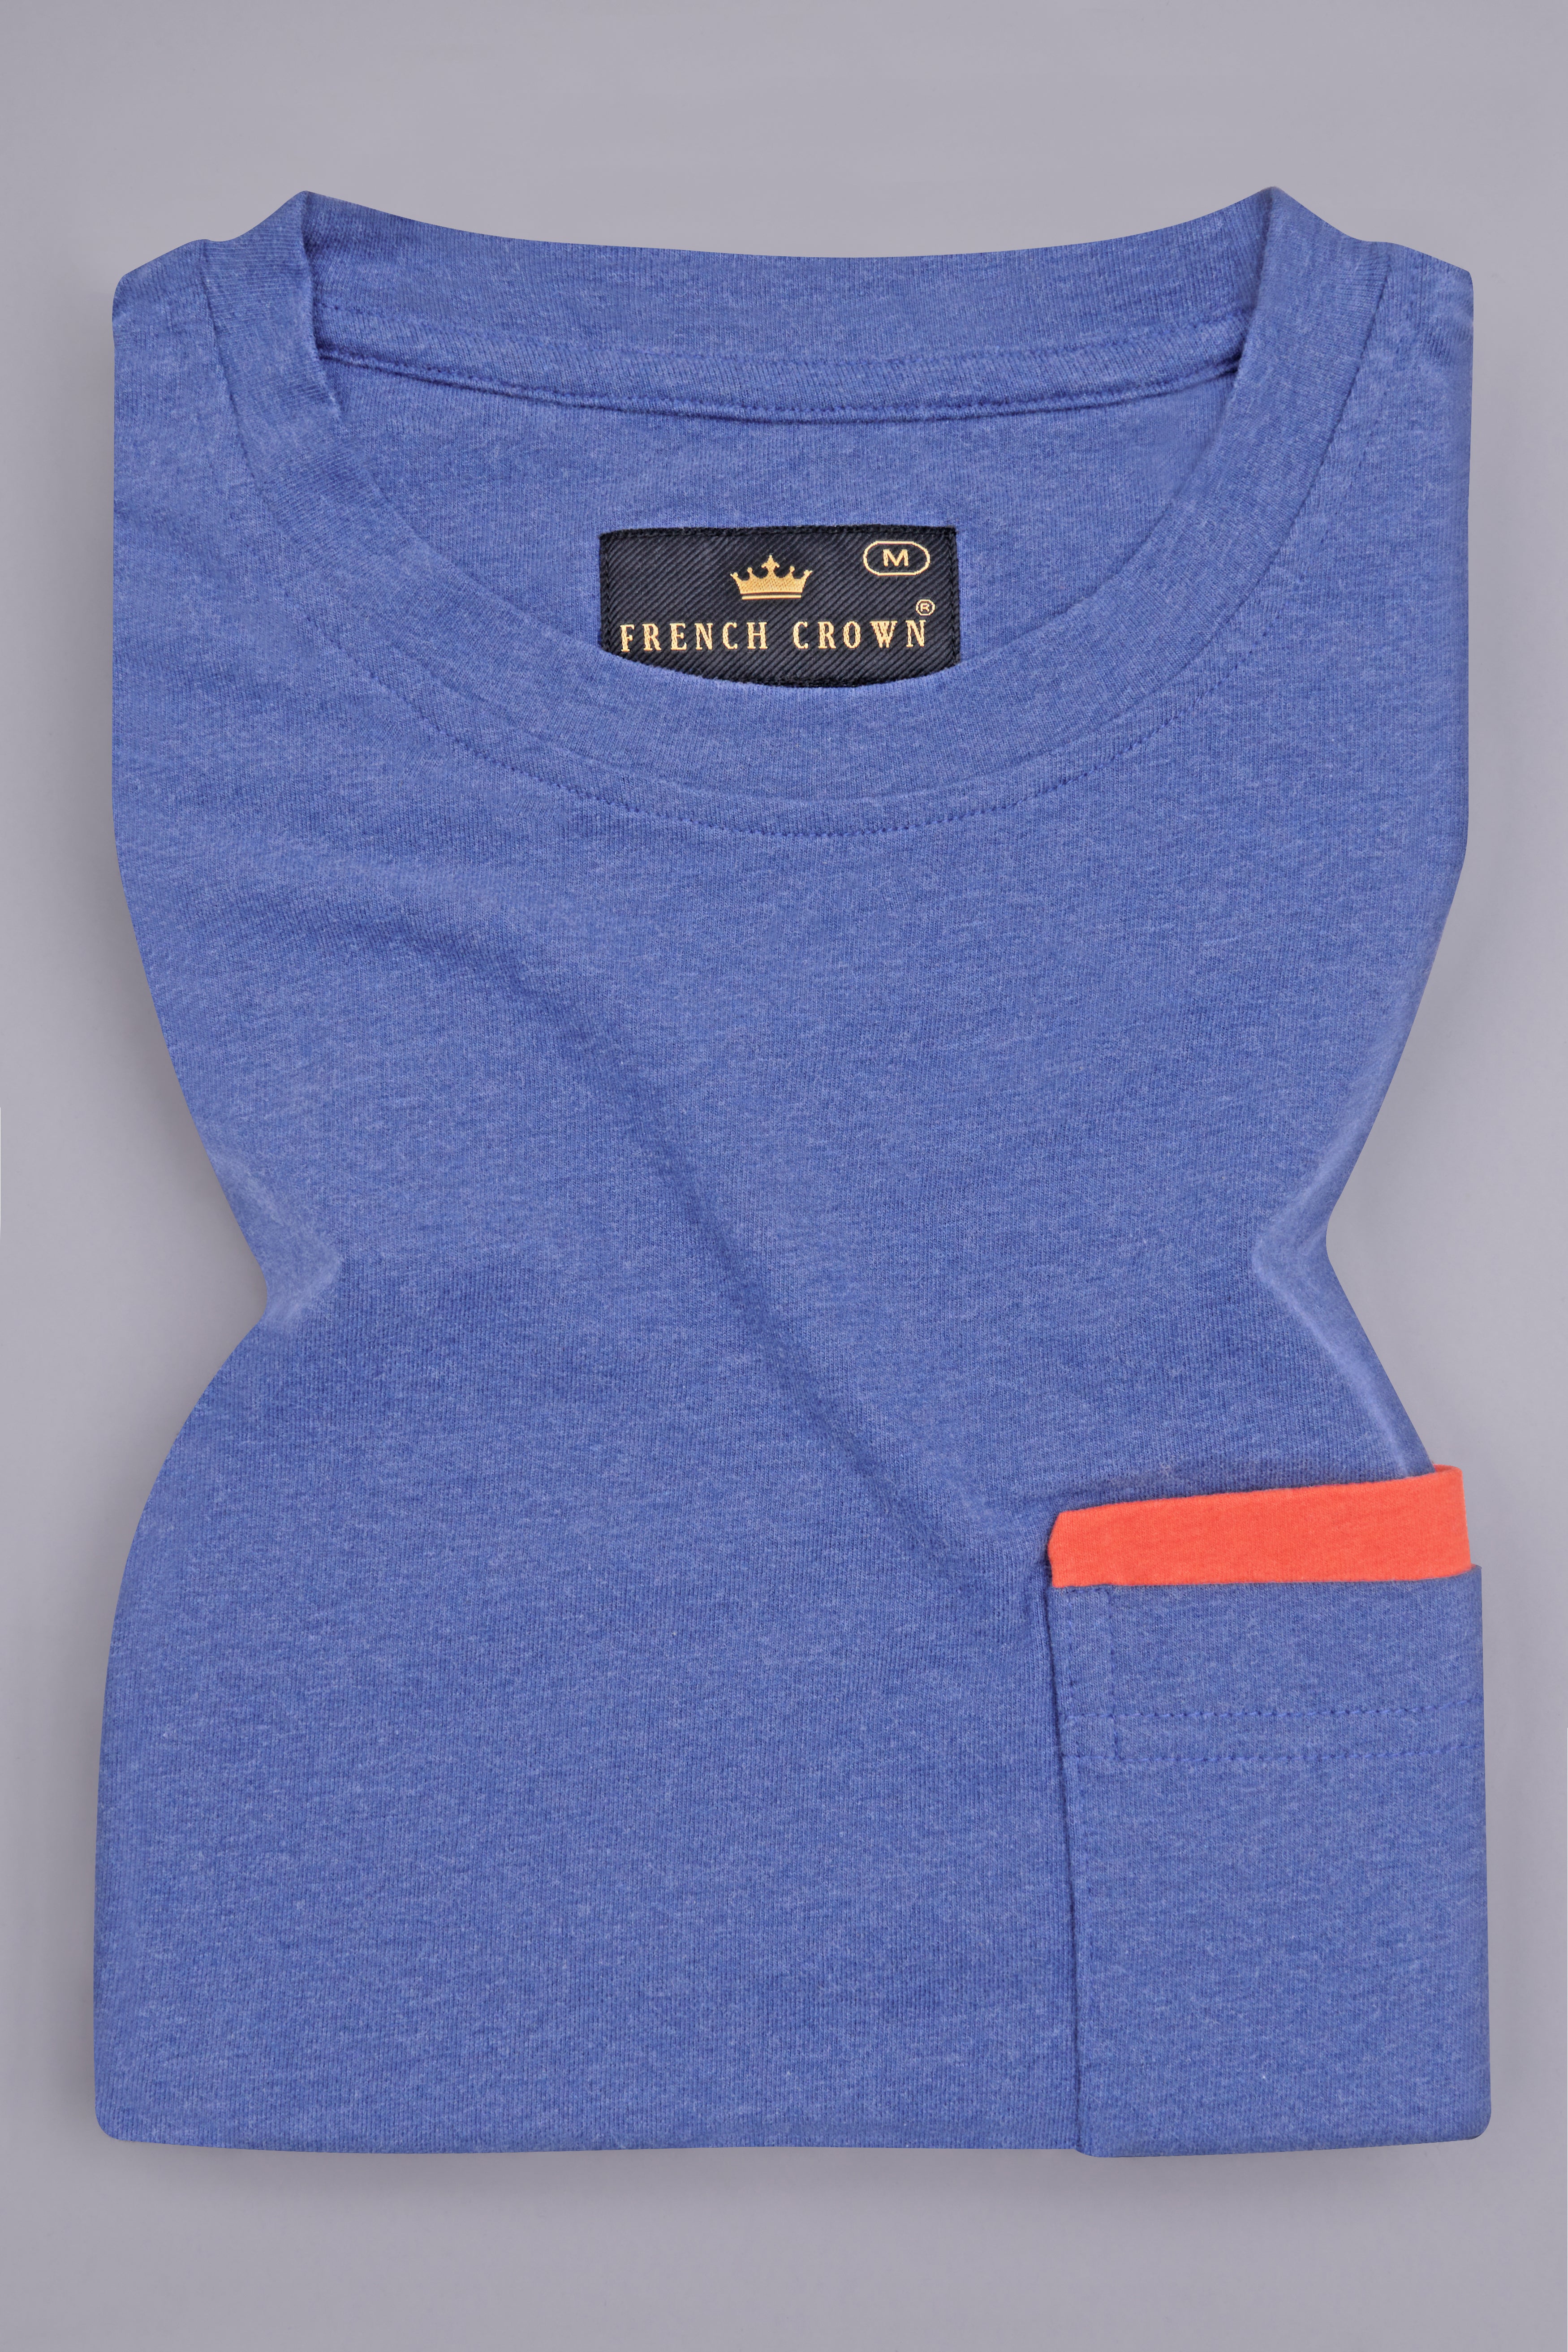 Scampi Blue Premium Cotton Jersey T-Shirt TS902-S, TS902-M, TS902-L, TS902-XL, TS902-XXL